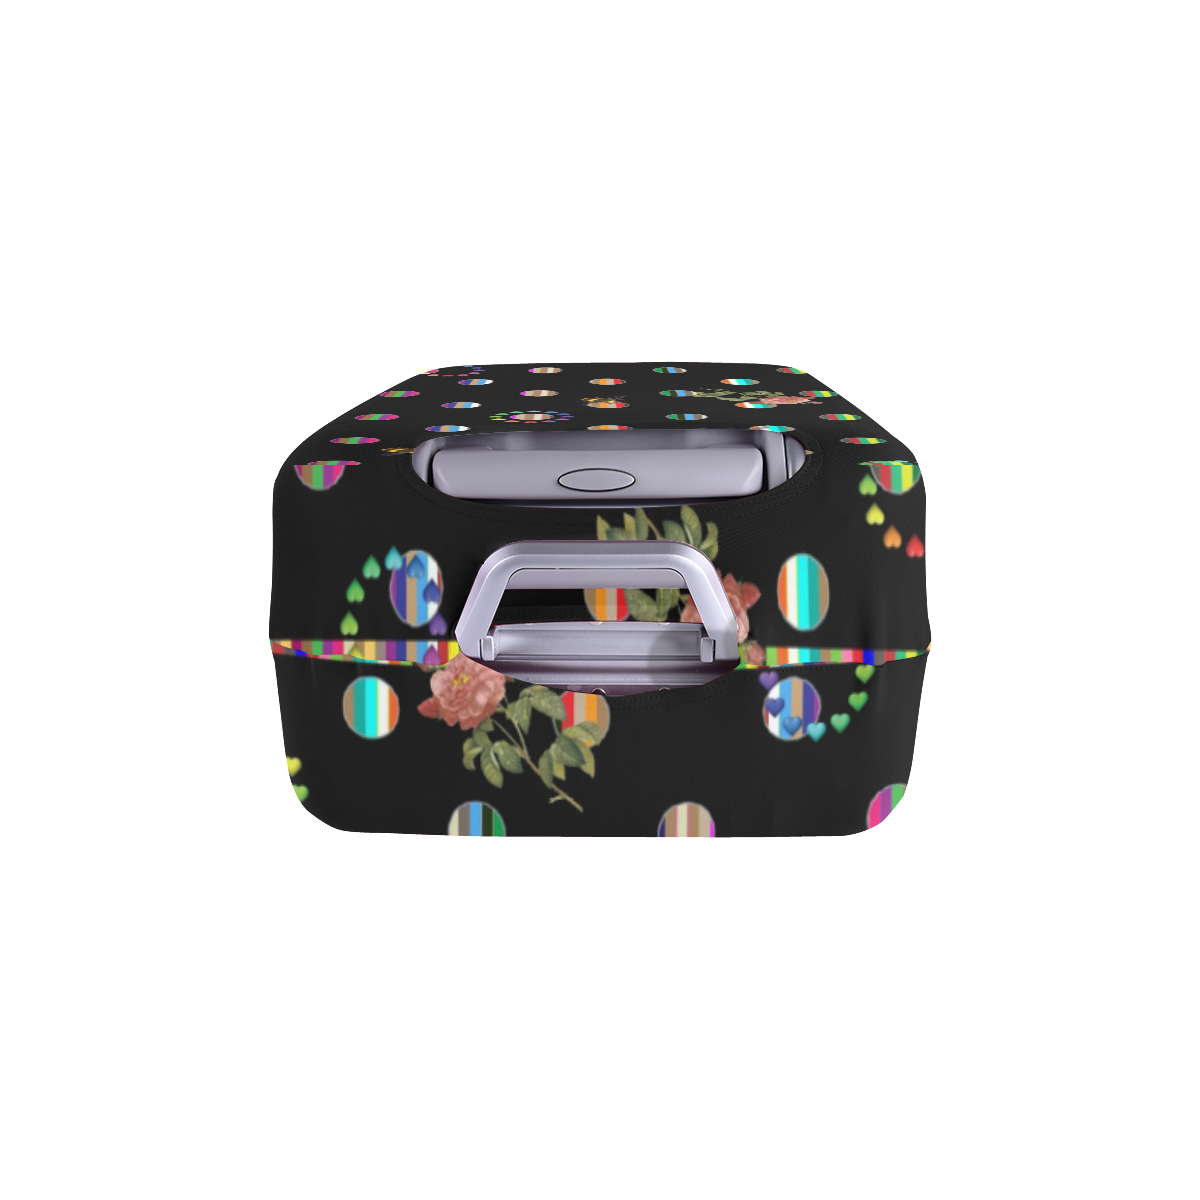 Rainbow Polka Luggage Cover/Large 26"-28"